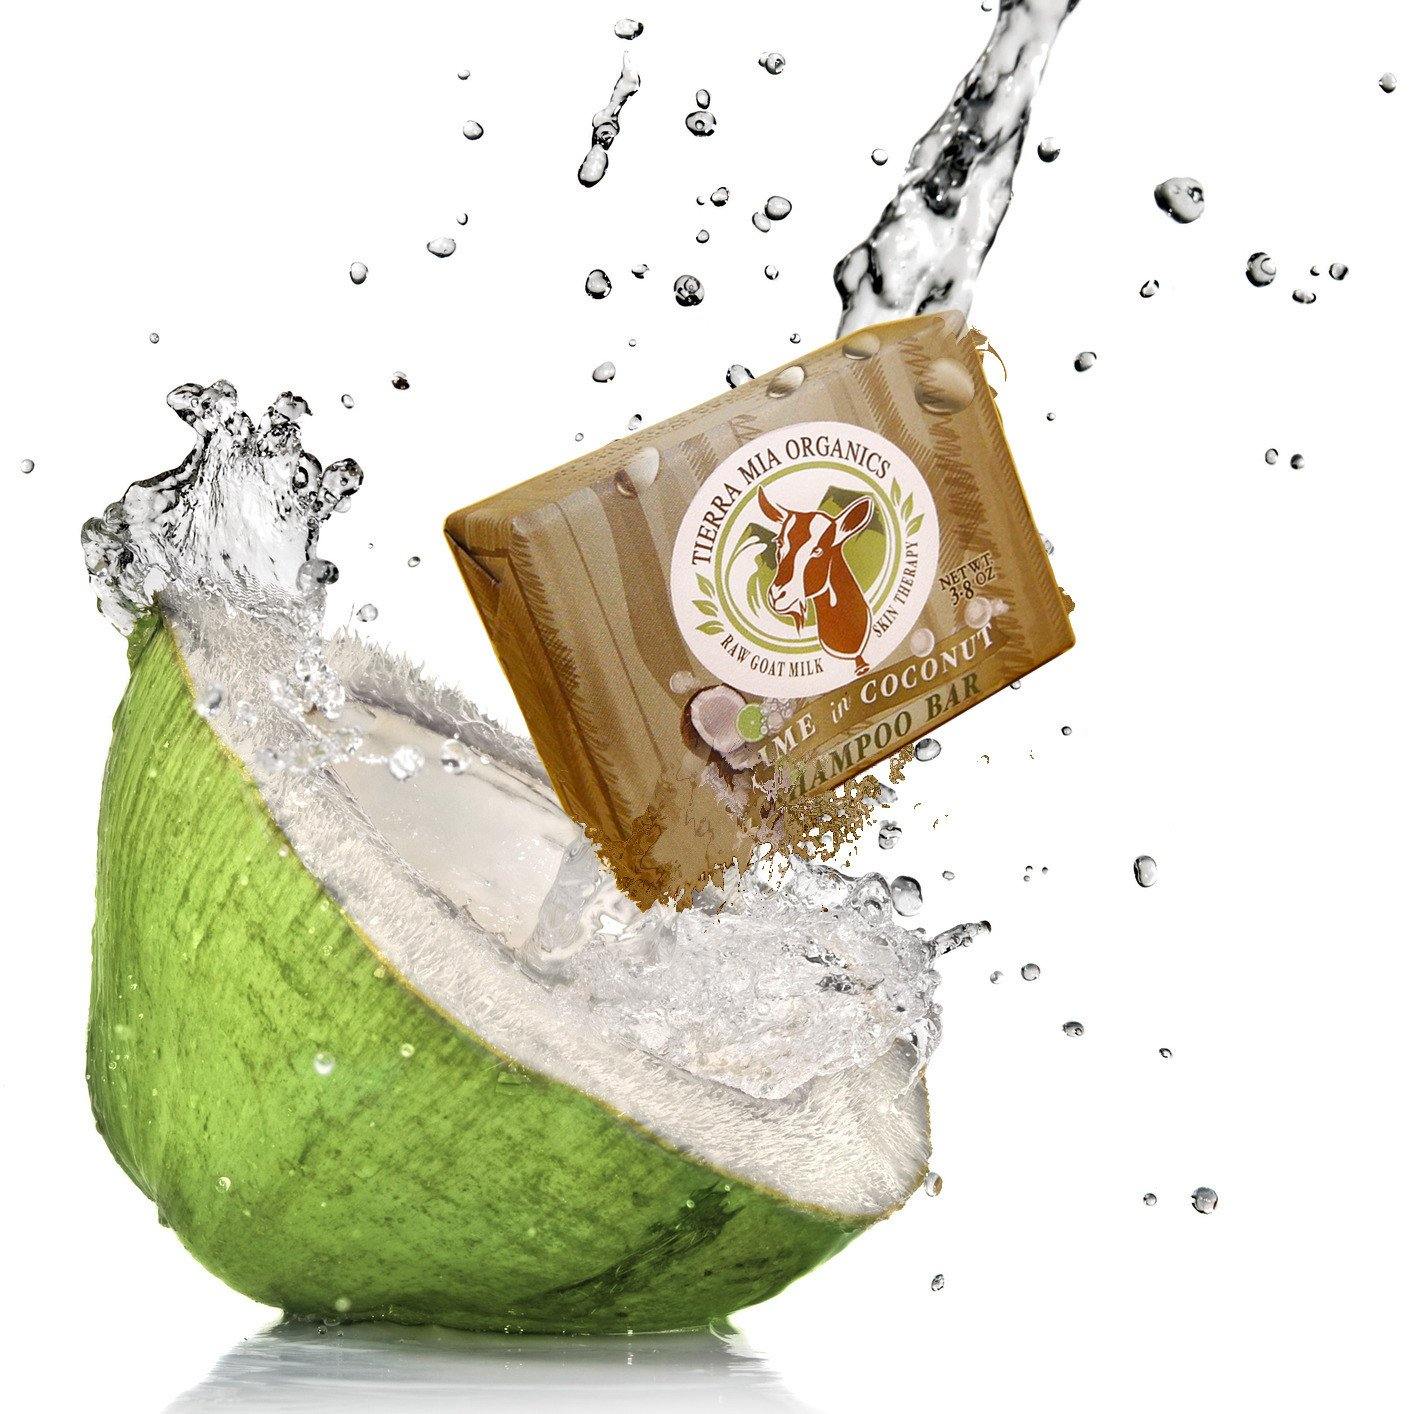 Tierra Mia Organics Lime in Coconut Shampoo Bar in Splash of real coconut